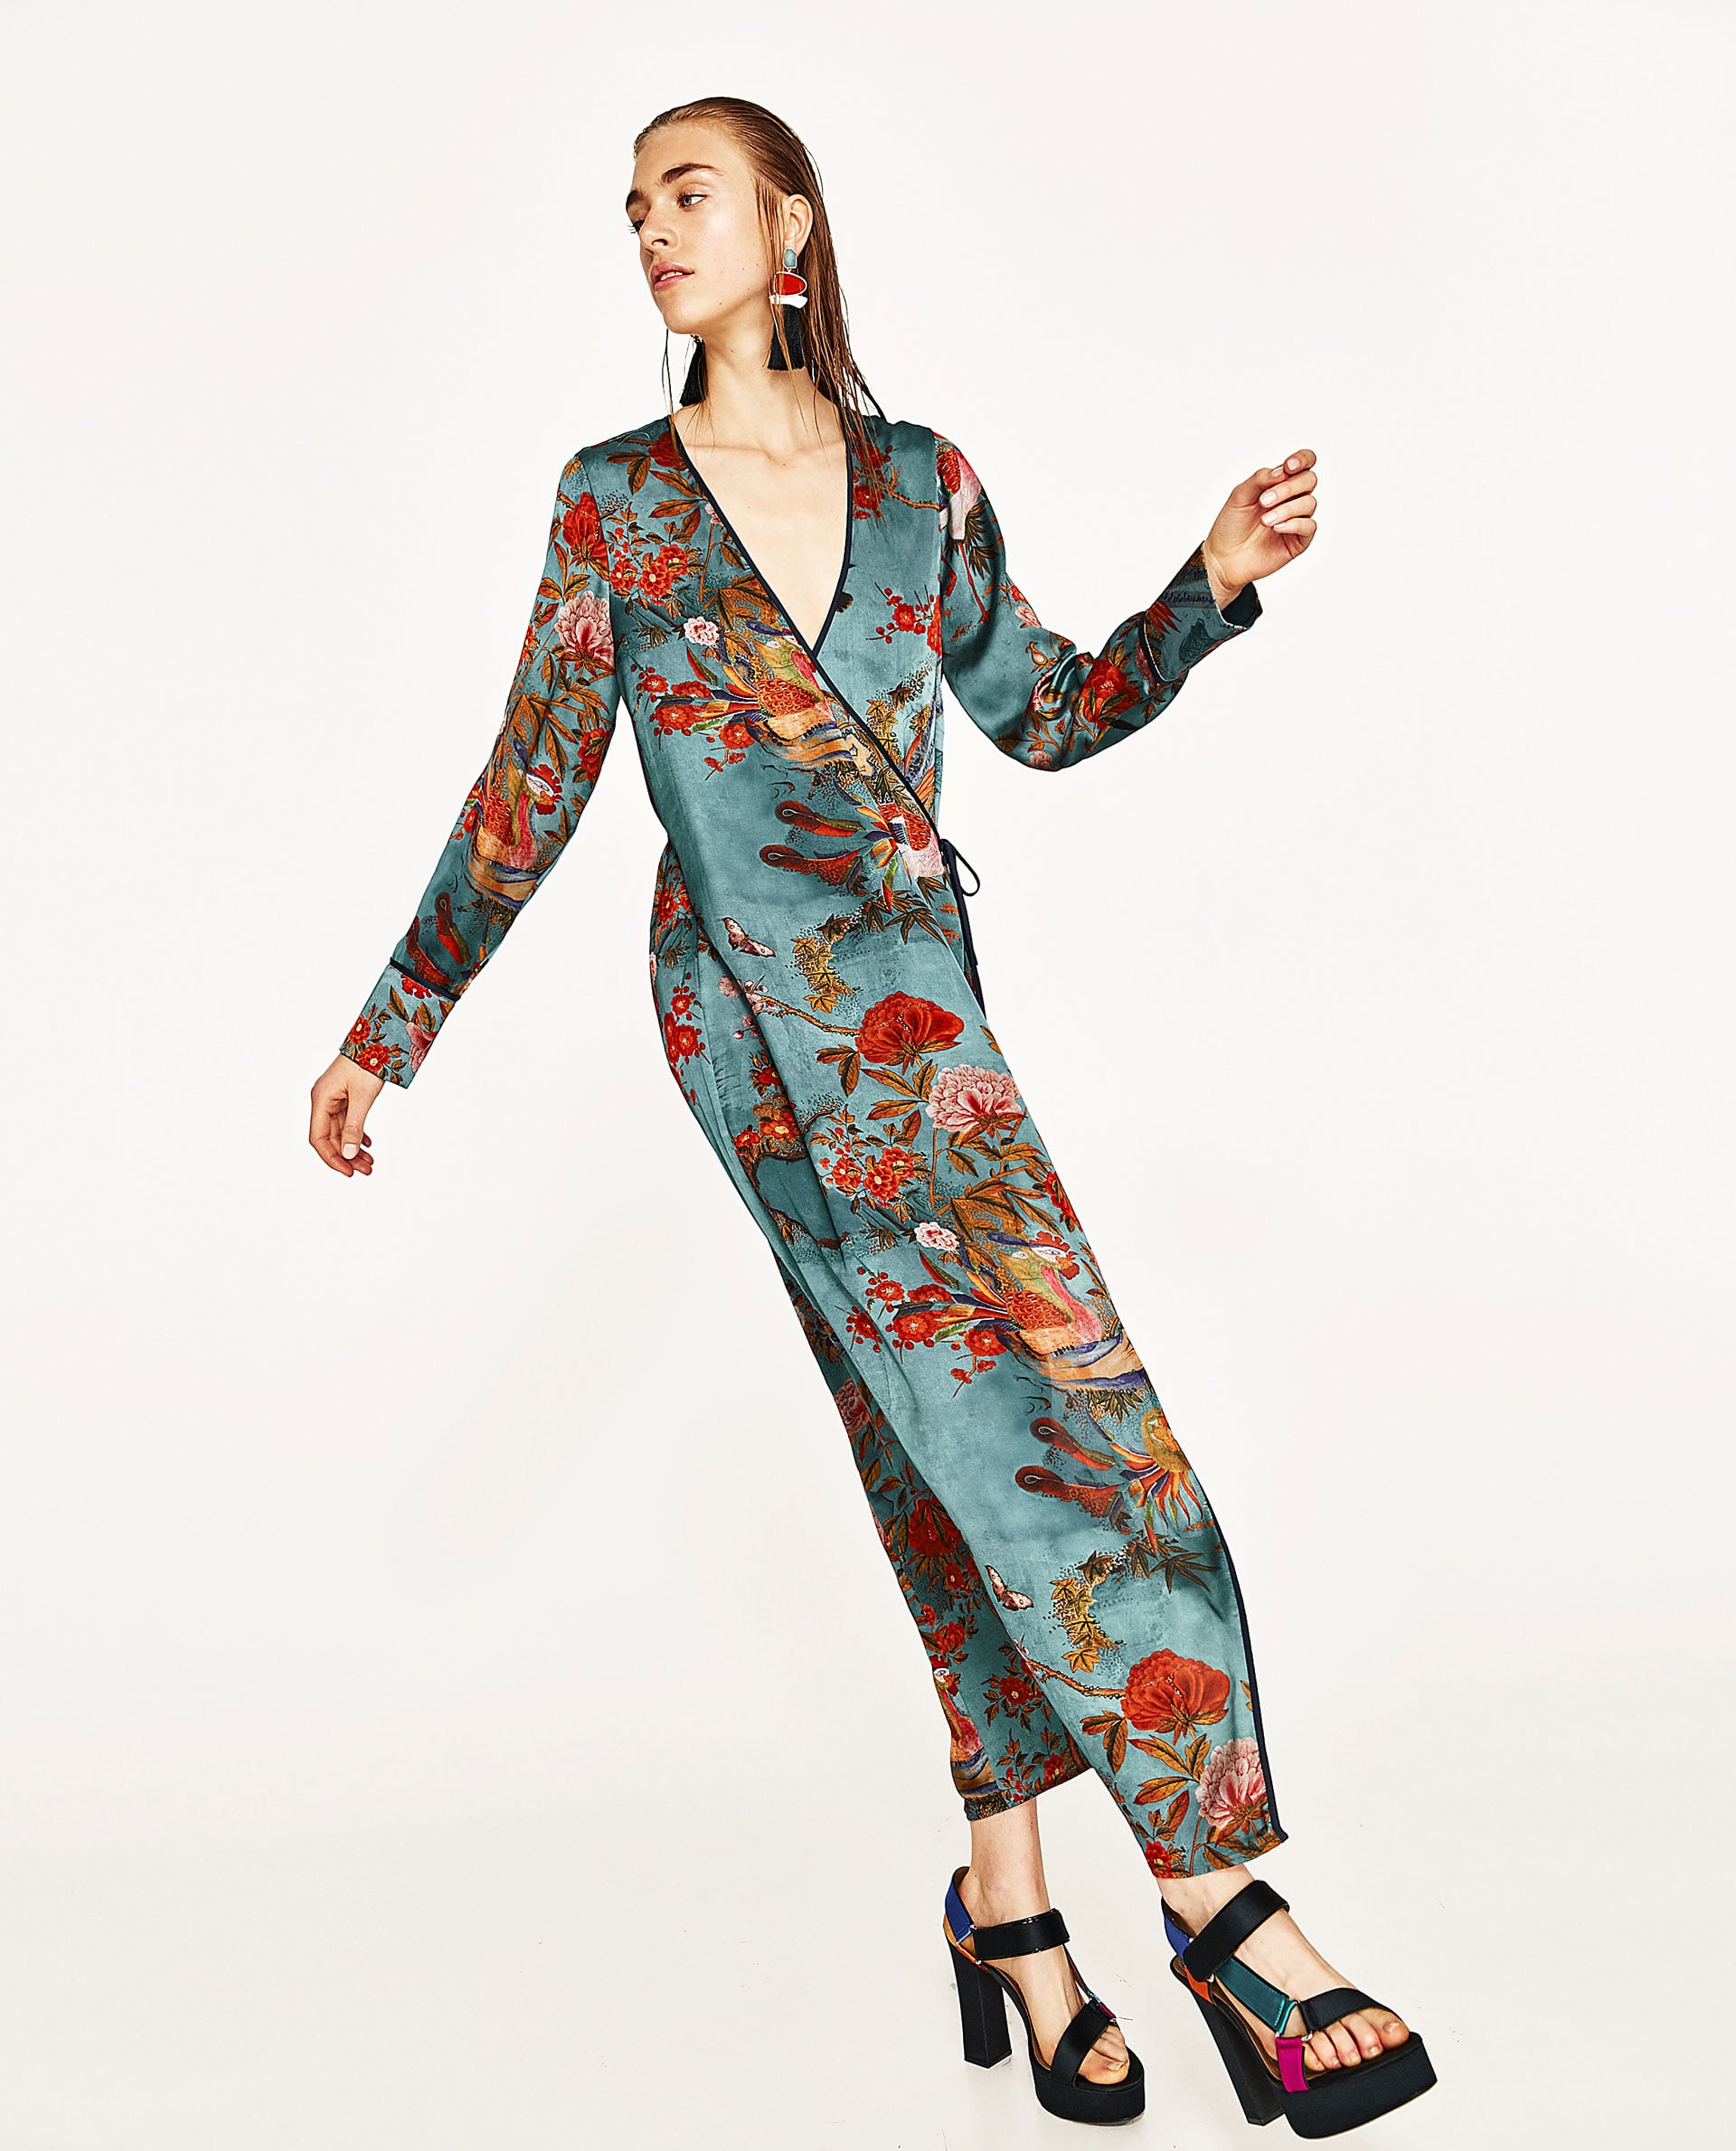 Zara Printed Kimono Dress | How to Get 